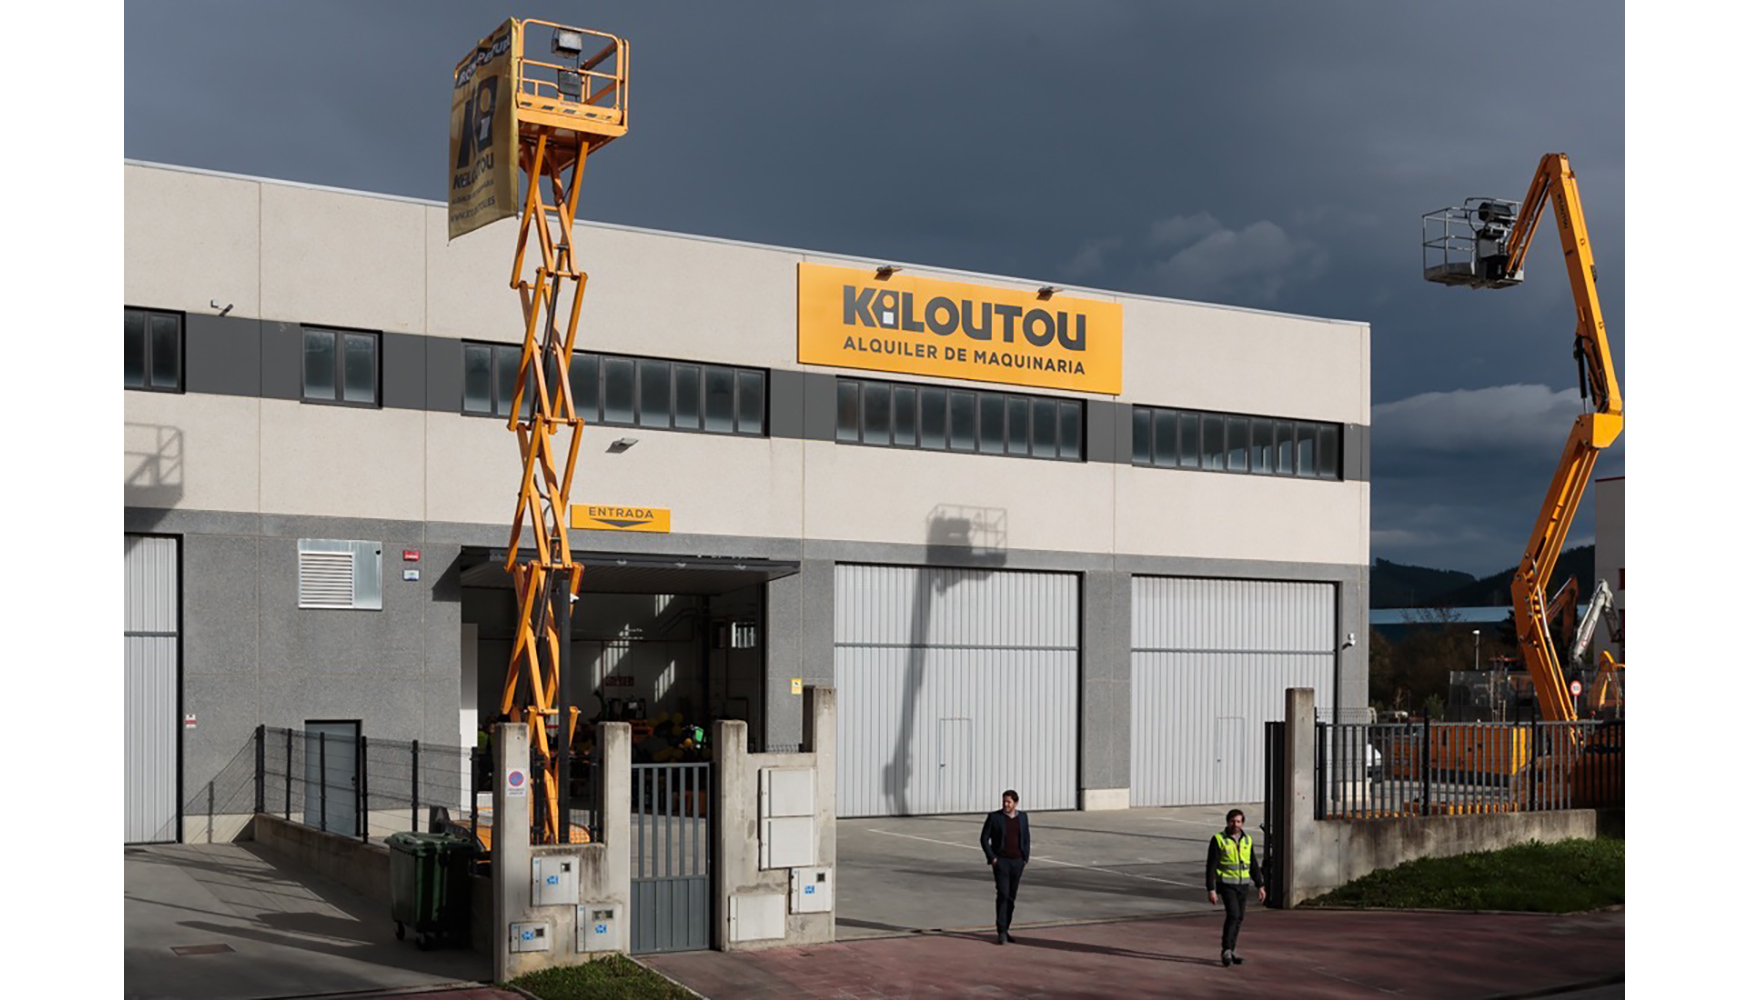 Nueva agencia de Kiloutou en Bilbao